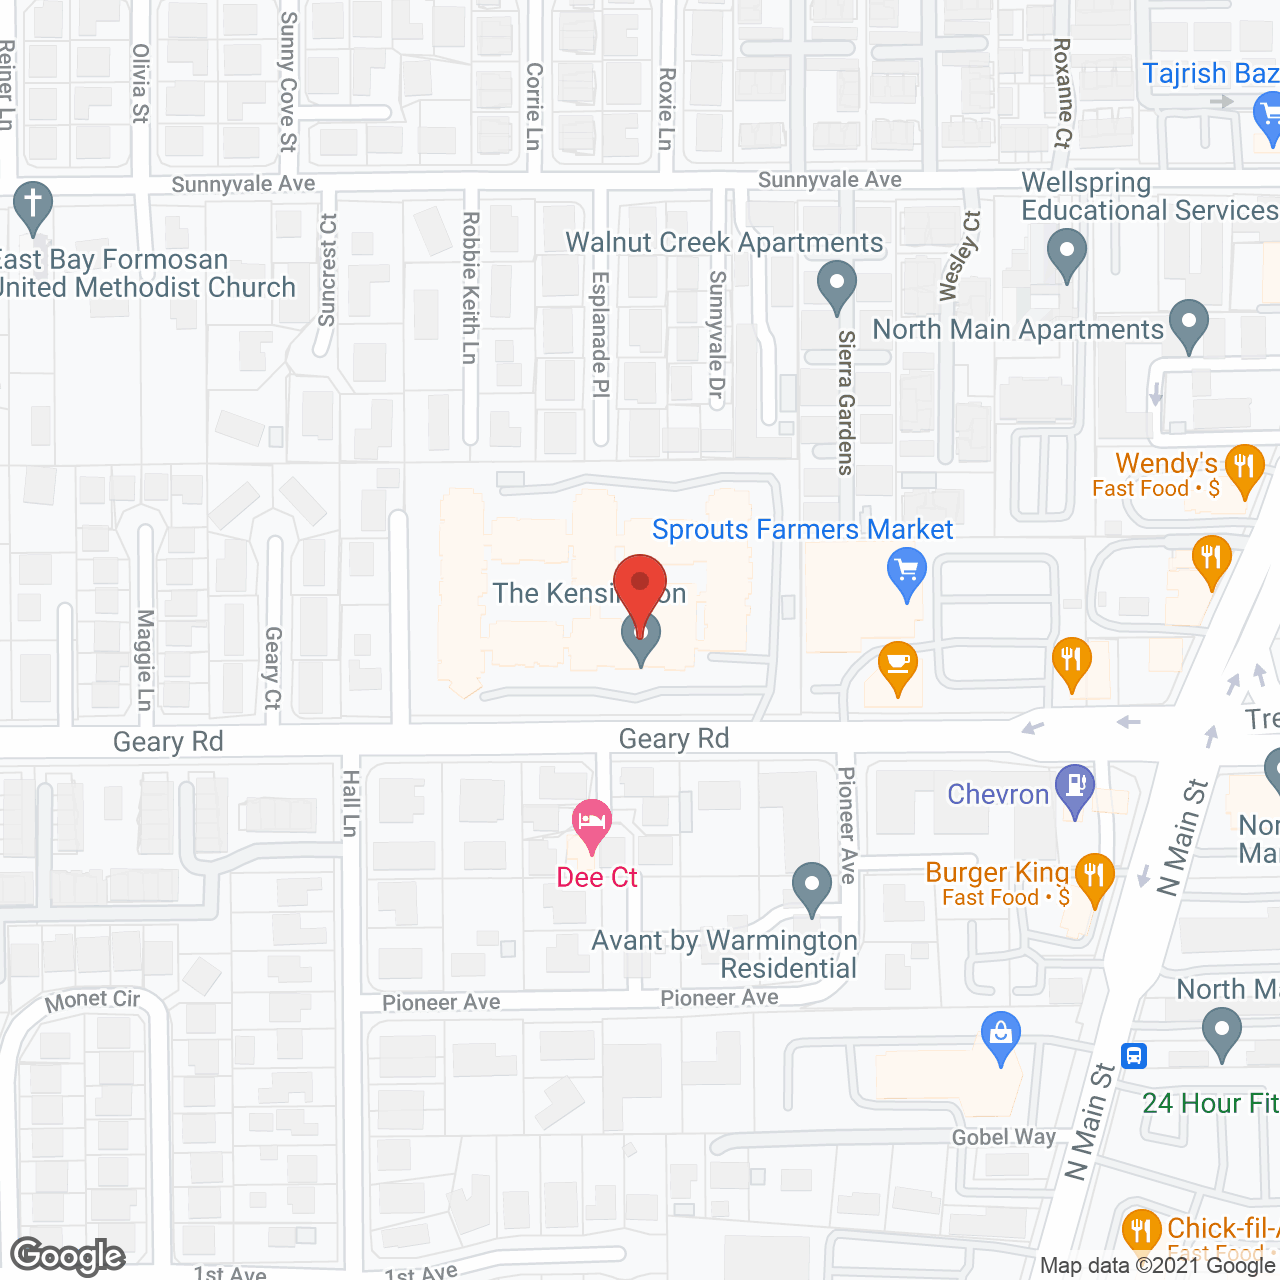 The Kensington in google map